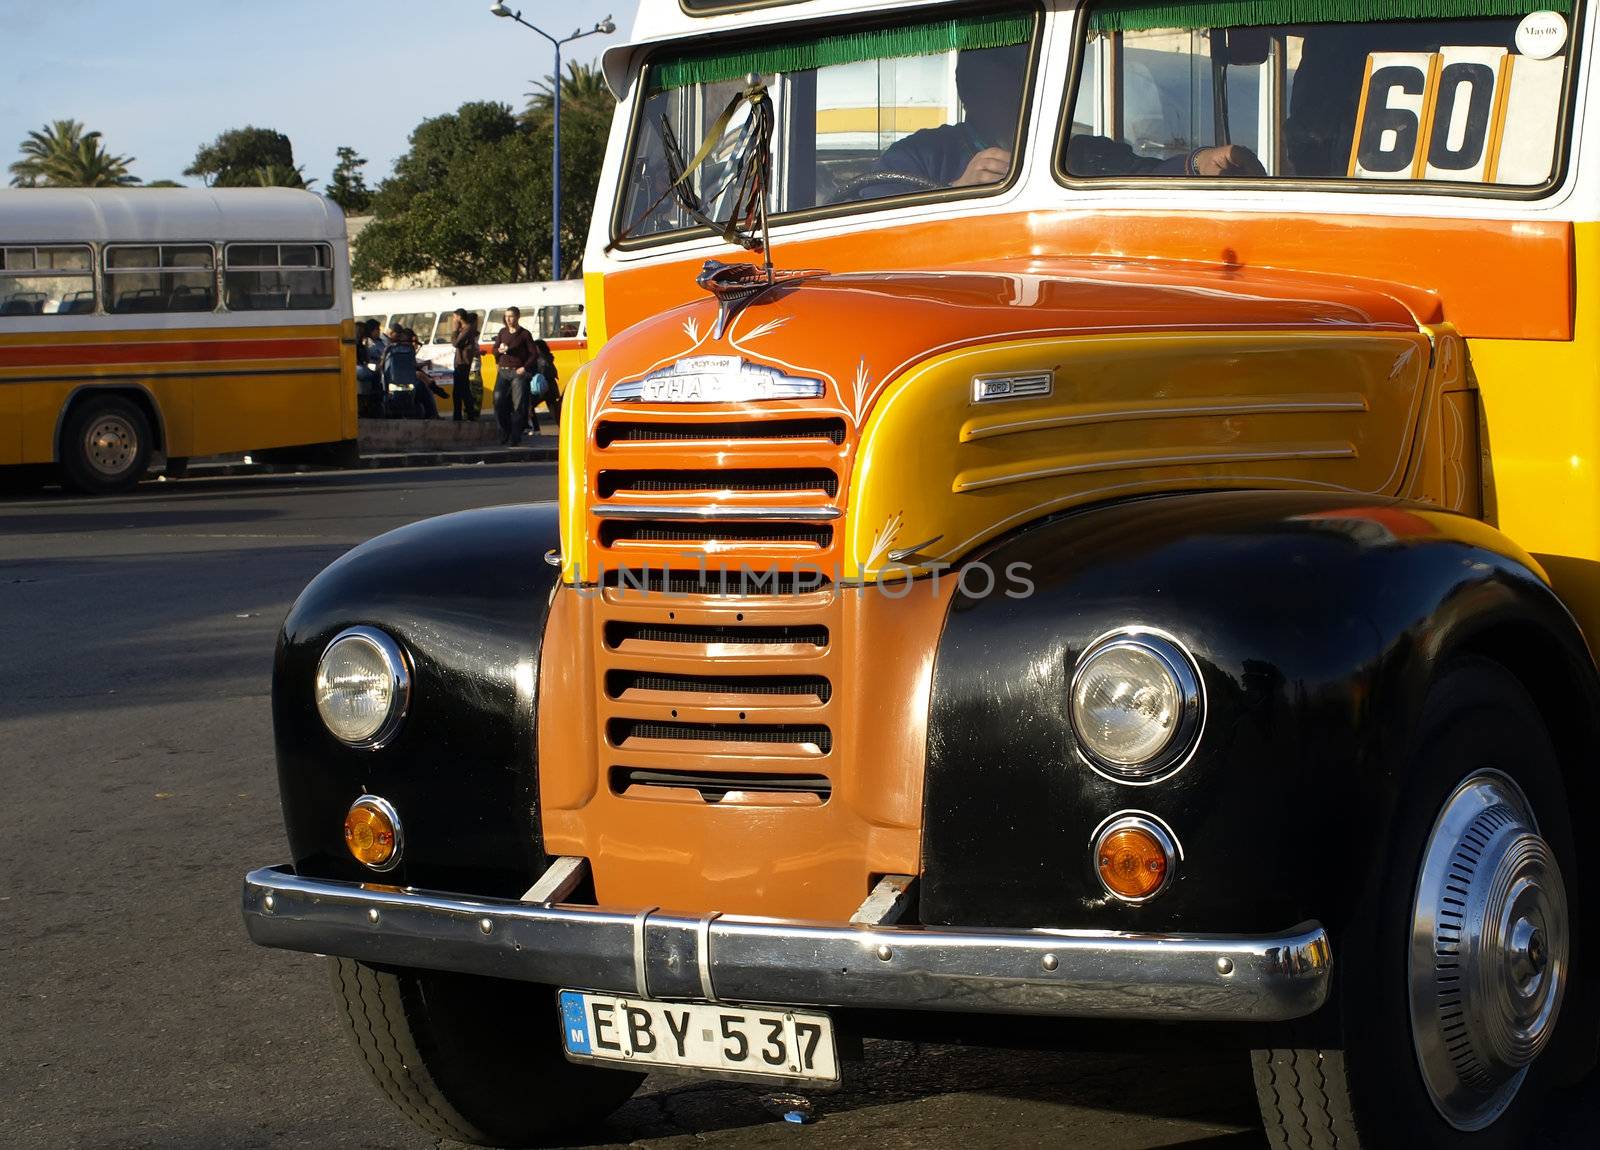 Malta Bus by PhotoWorks